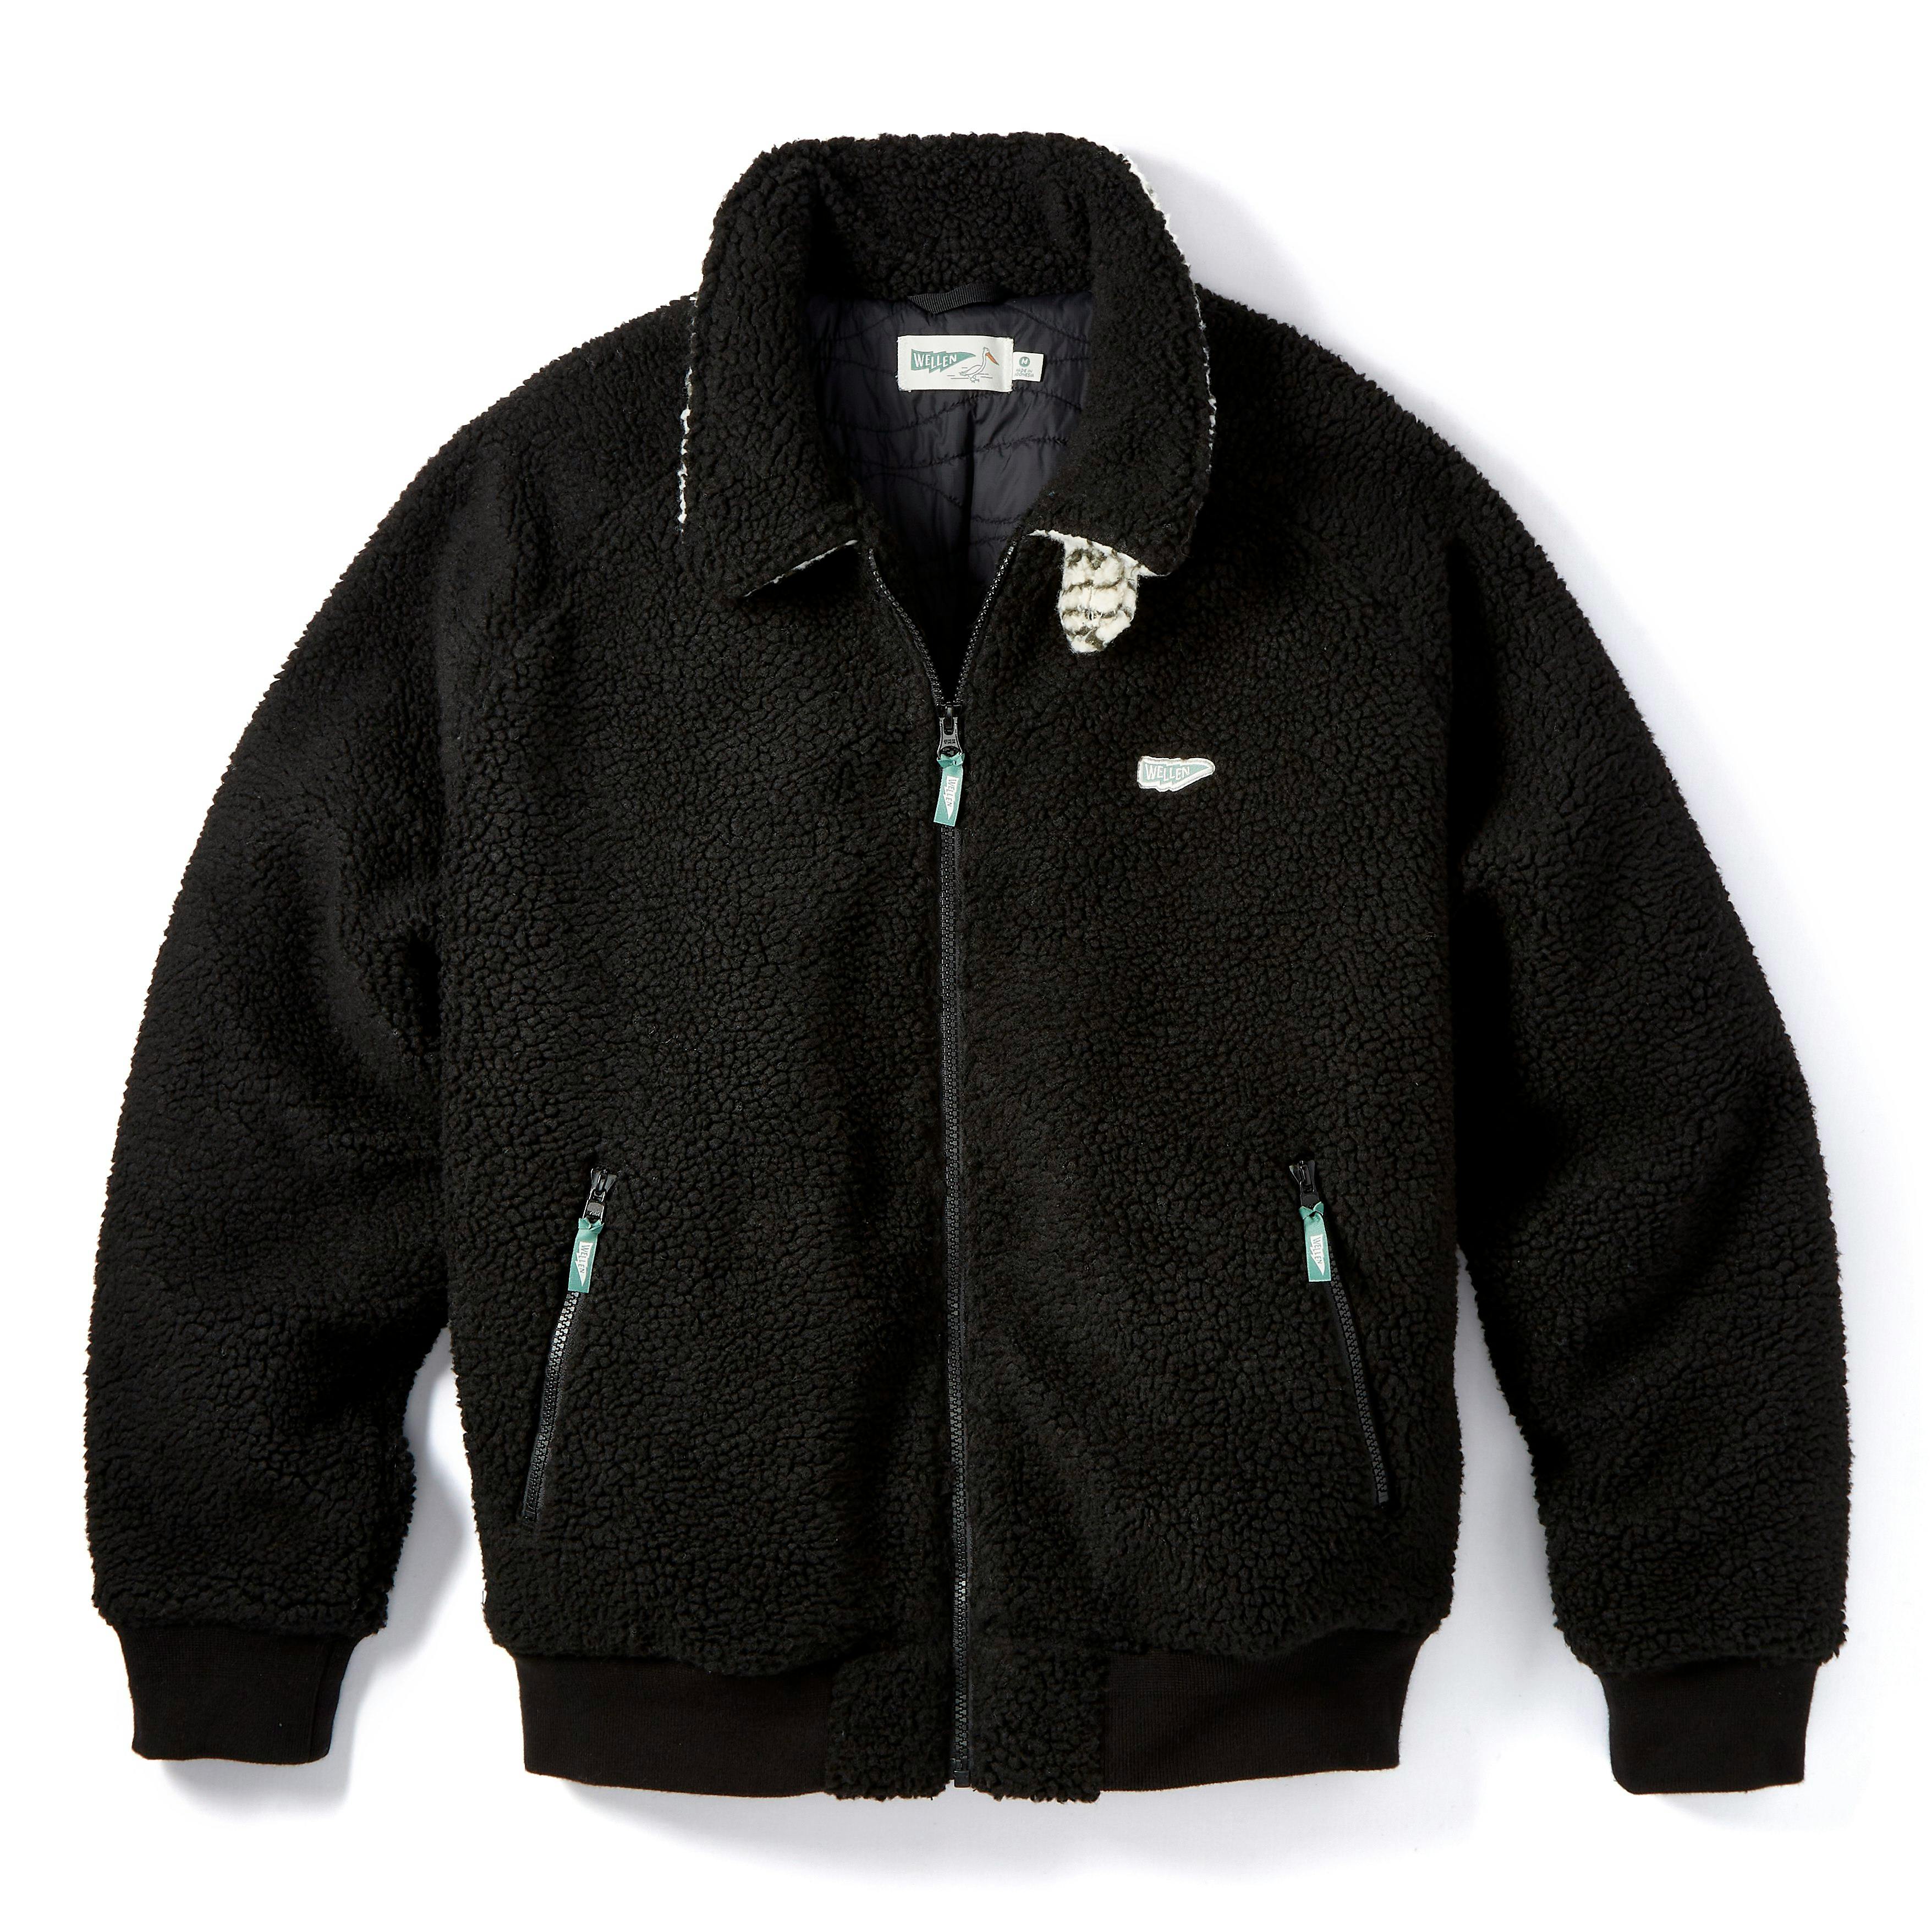 Dawn Patrol Quilted Fleece Jacket